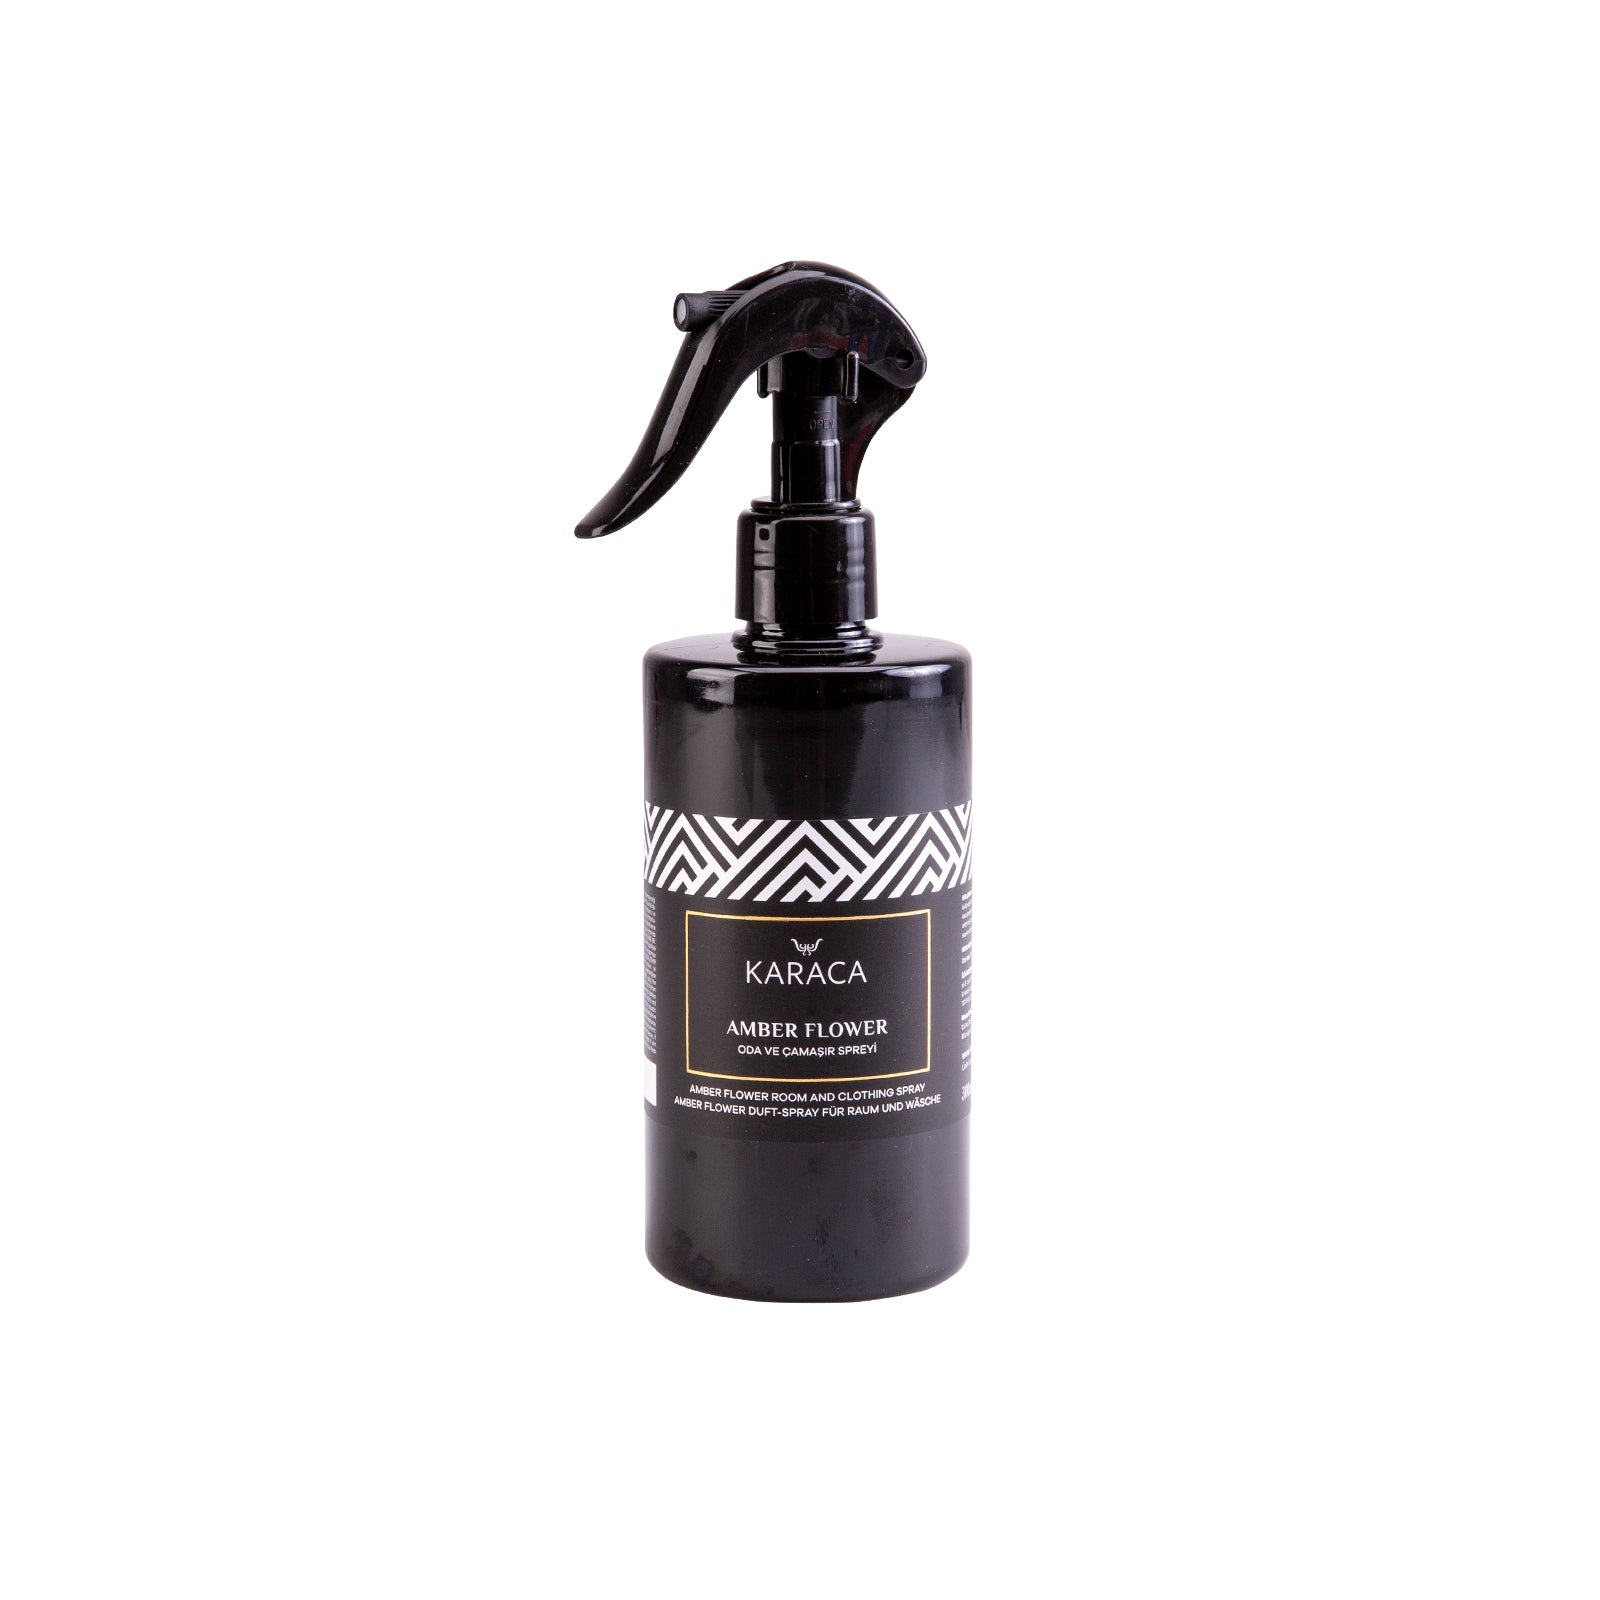 Karaca Amber duft spray 300ml - luxware-dk.myshopify.com